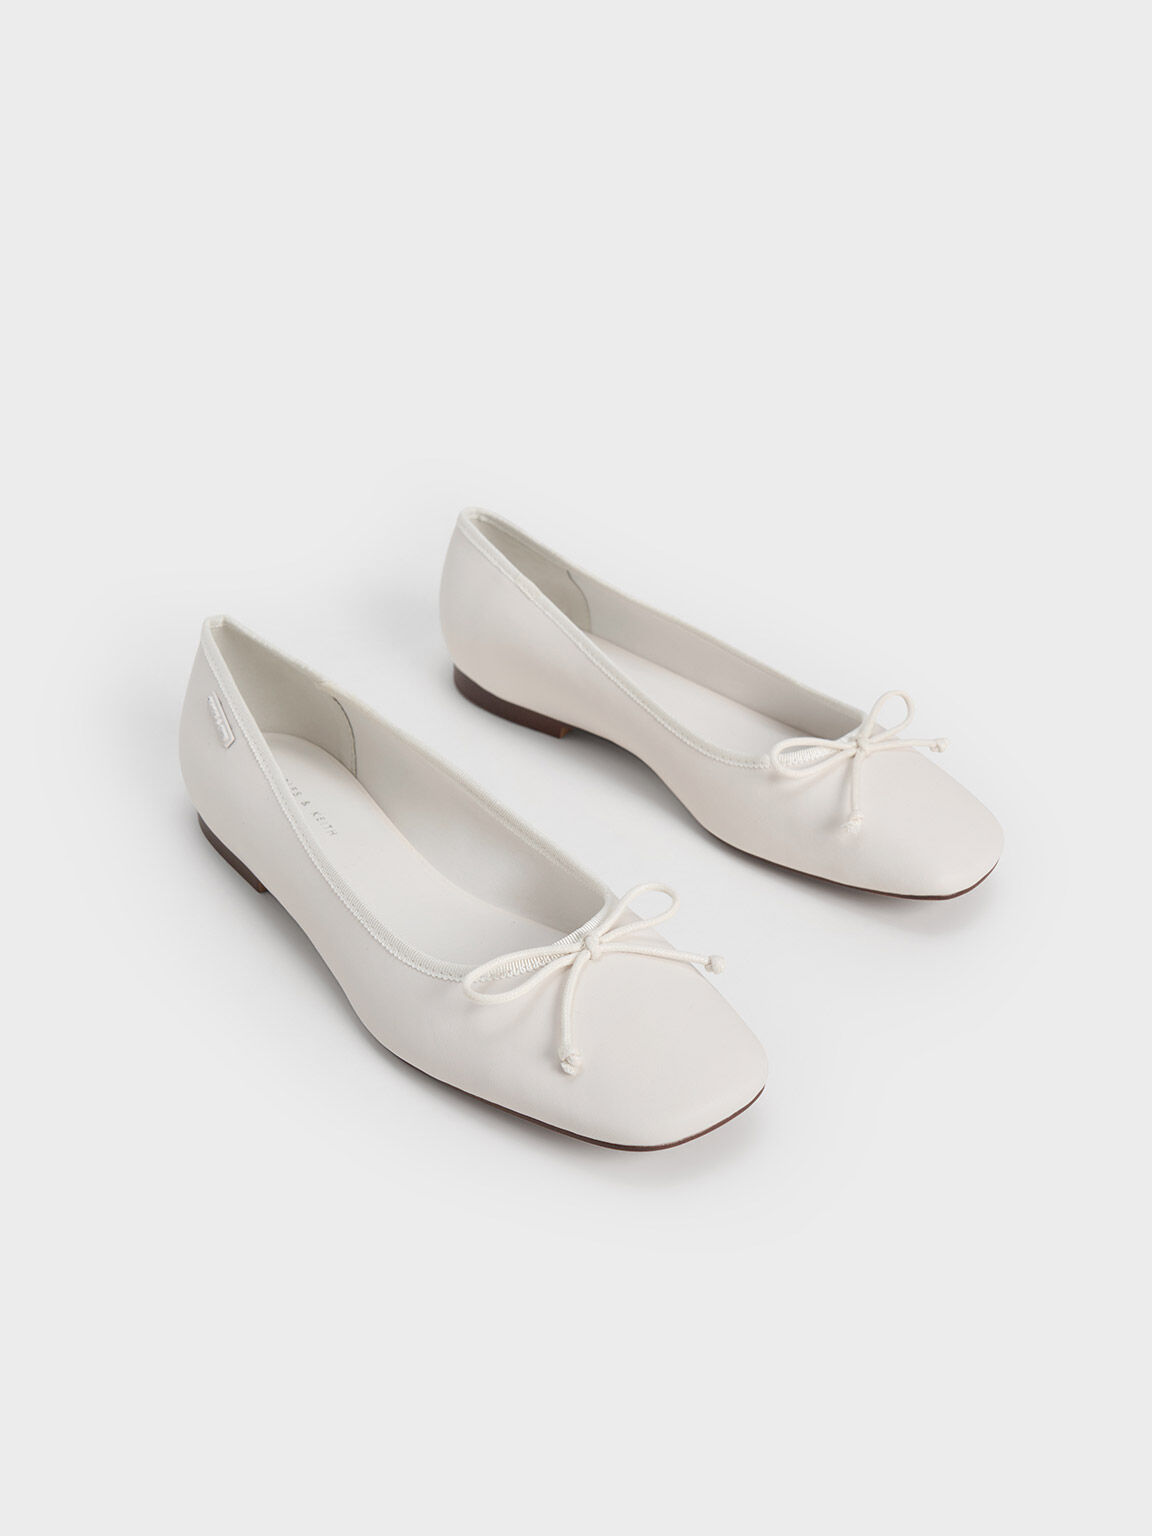 Essential Summer Shoes: Ballet Flats